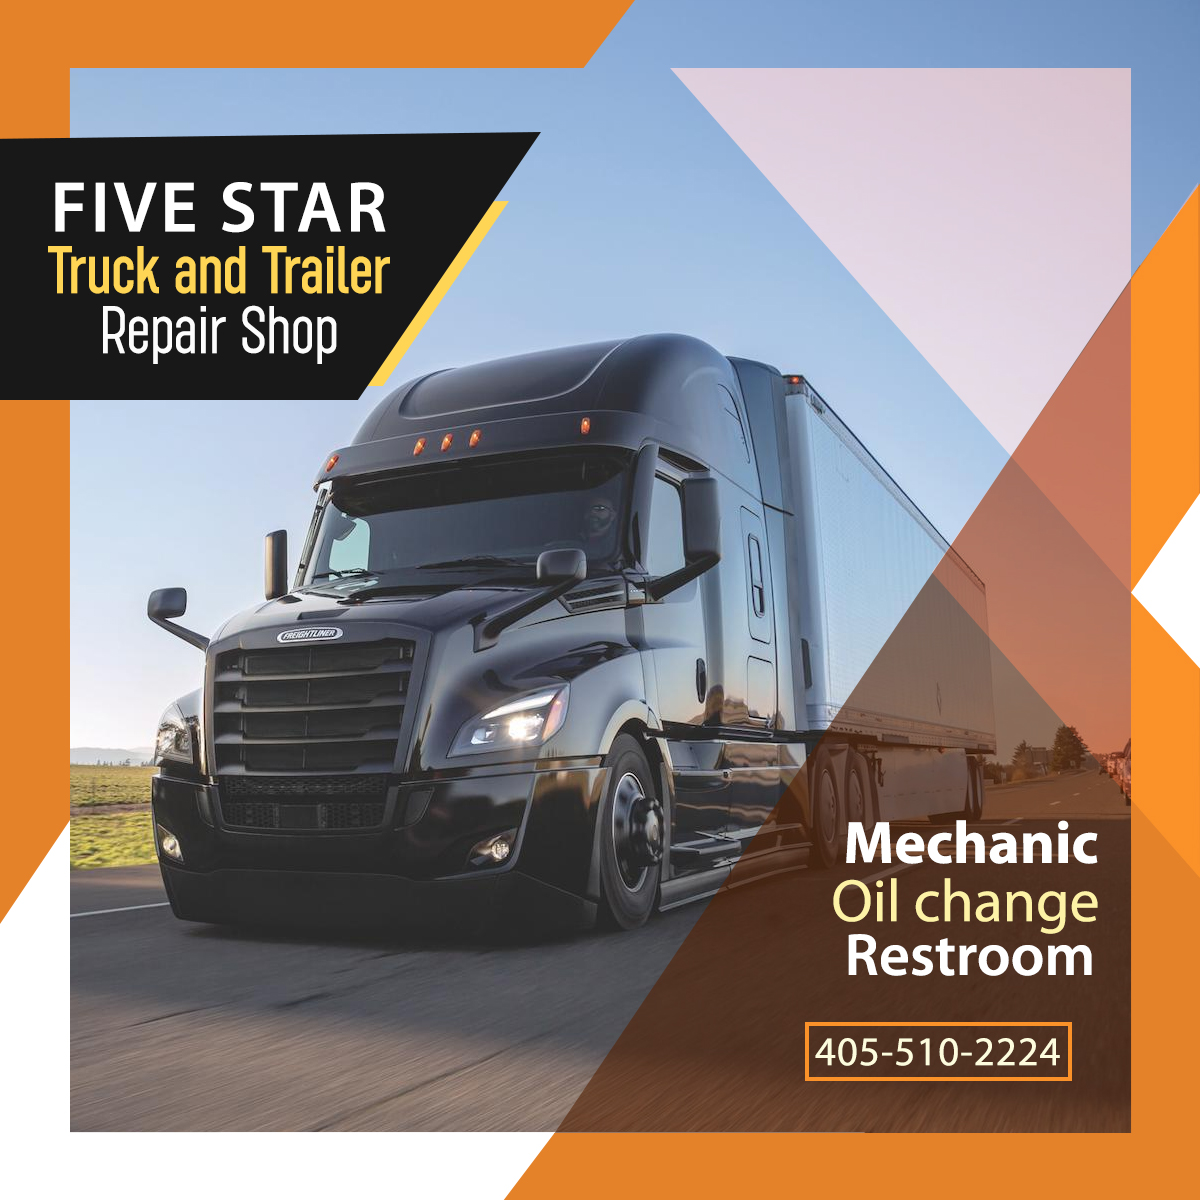 Five Star Truck and Trailer Repair Shop